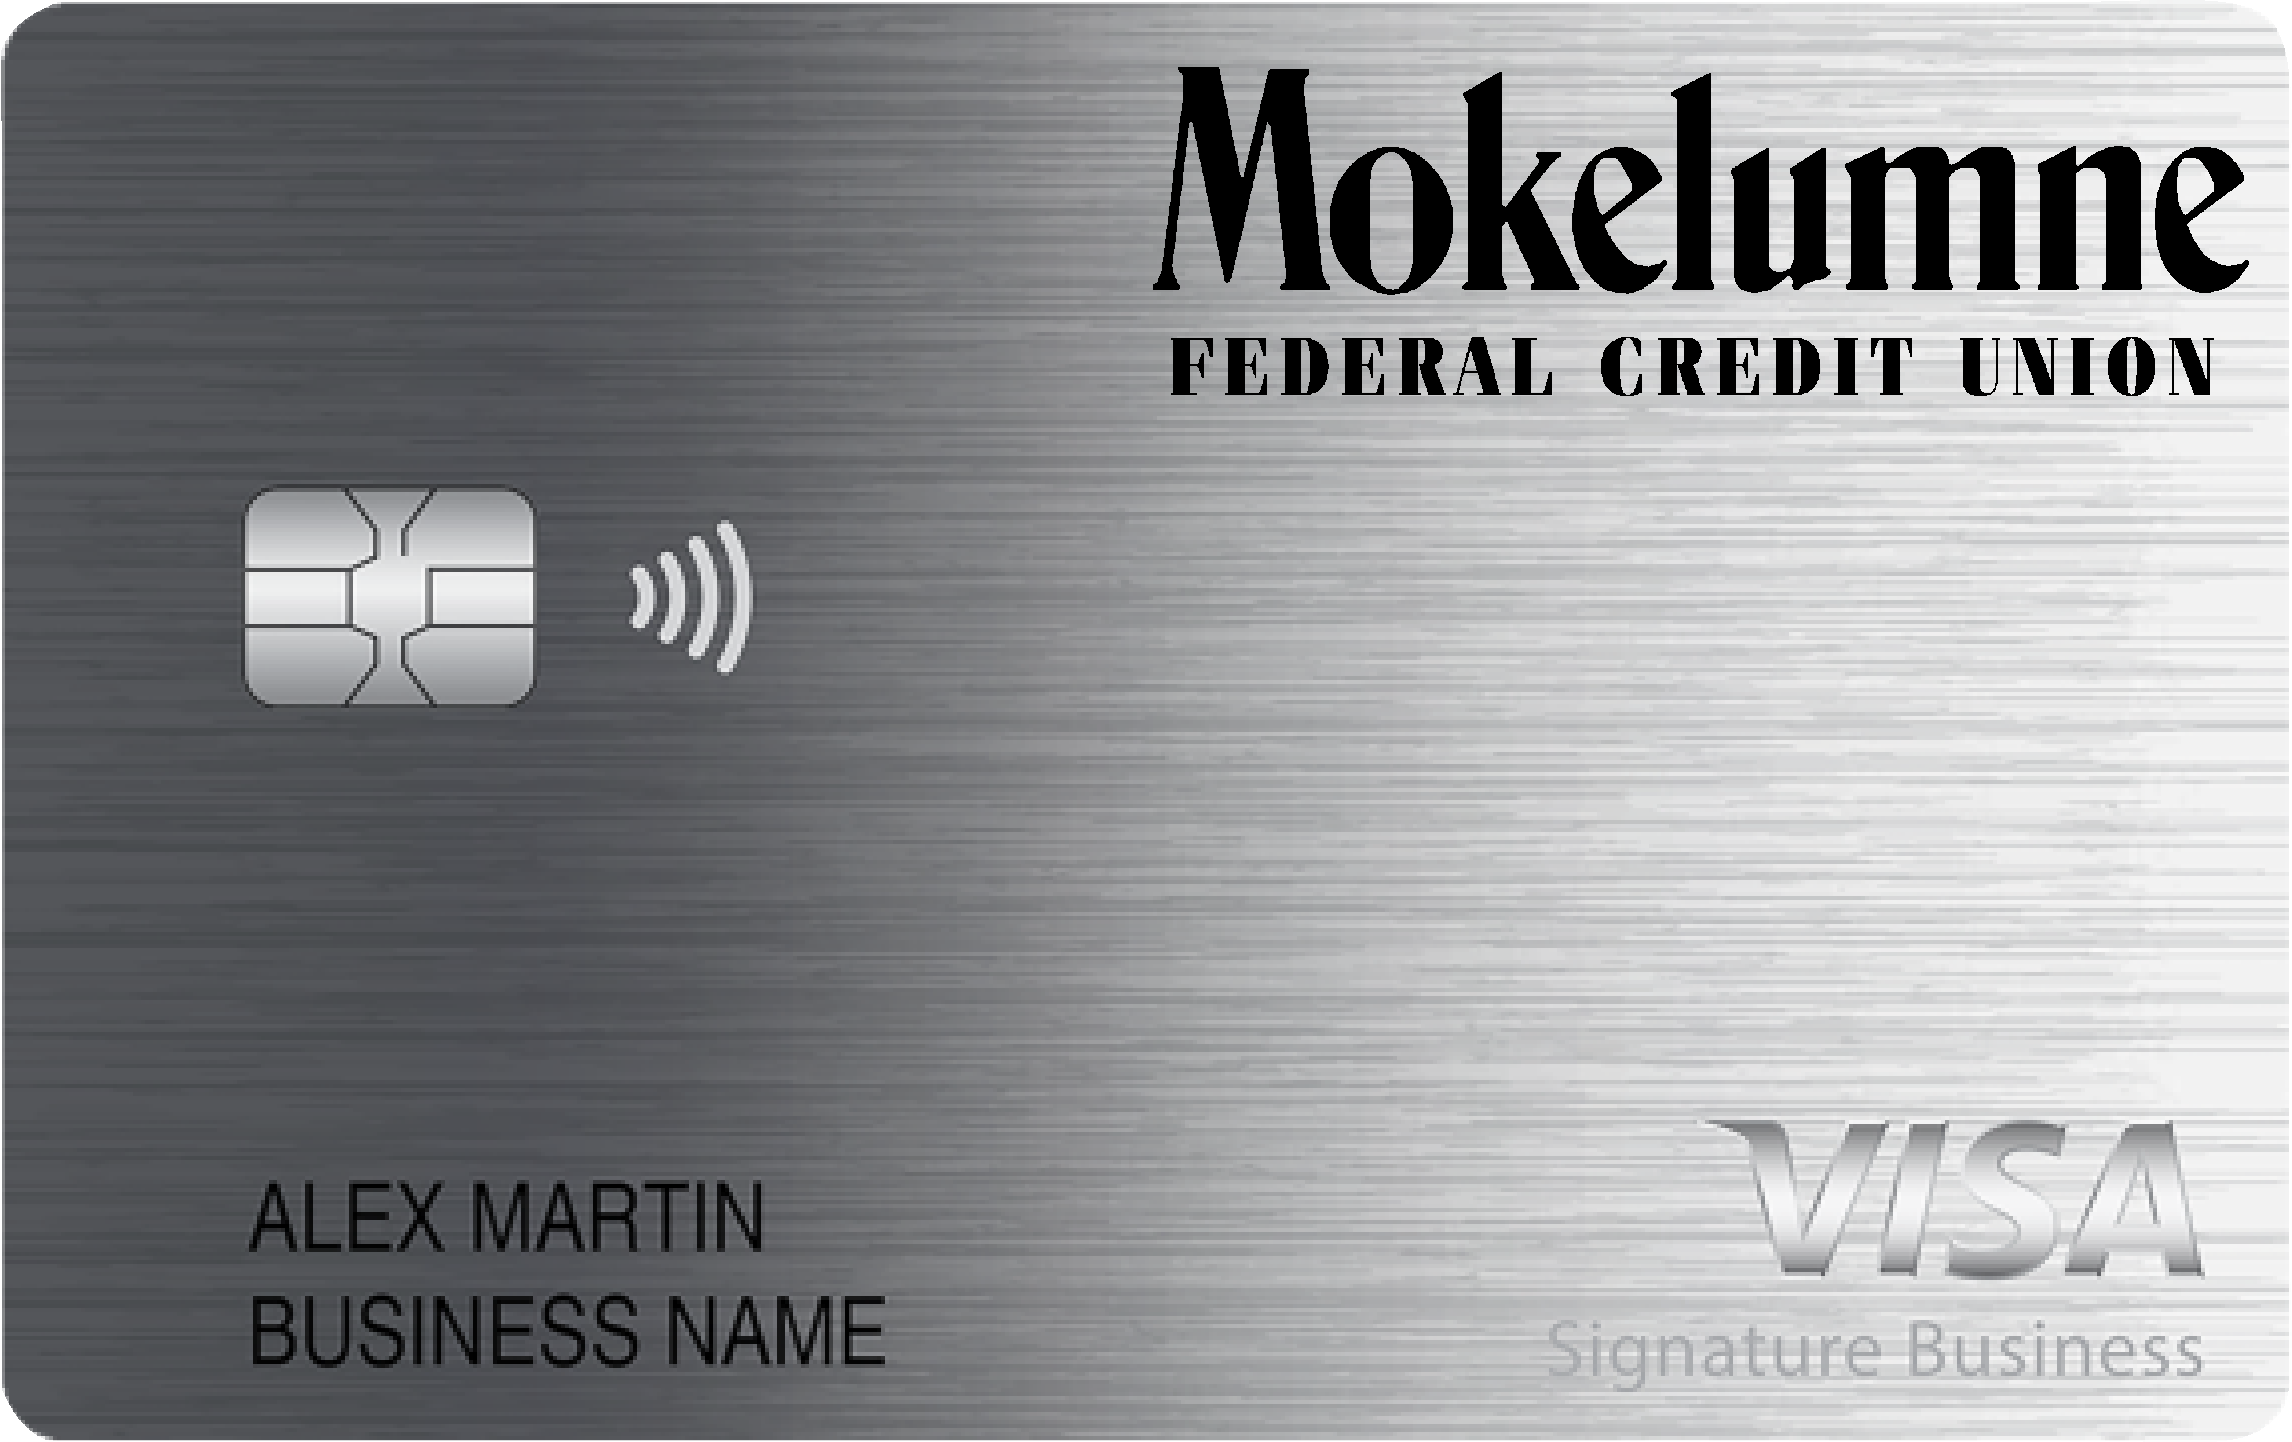 Mokelumne Federal Credit Union Smart Business Rewards Card